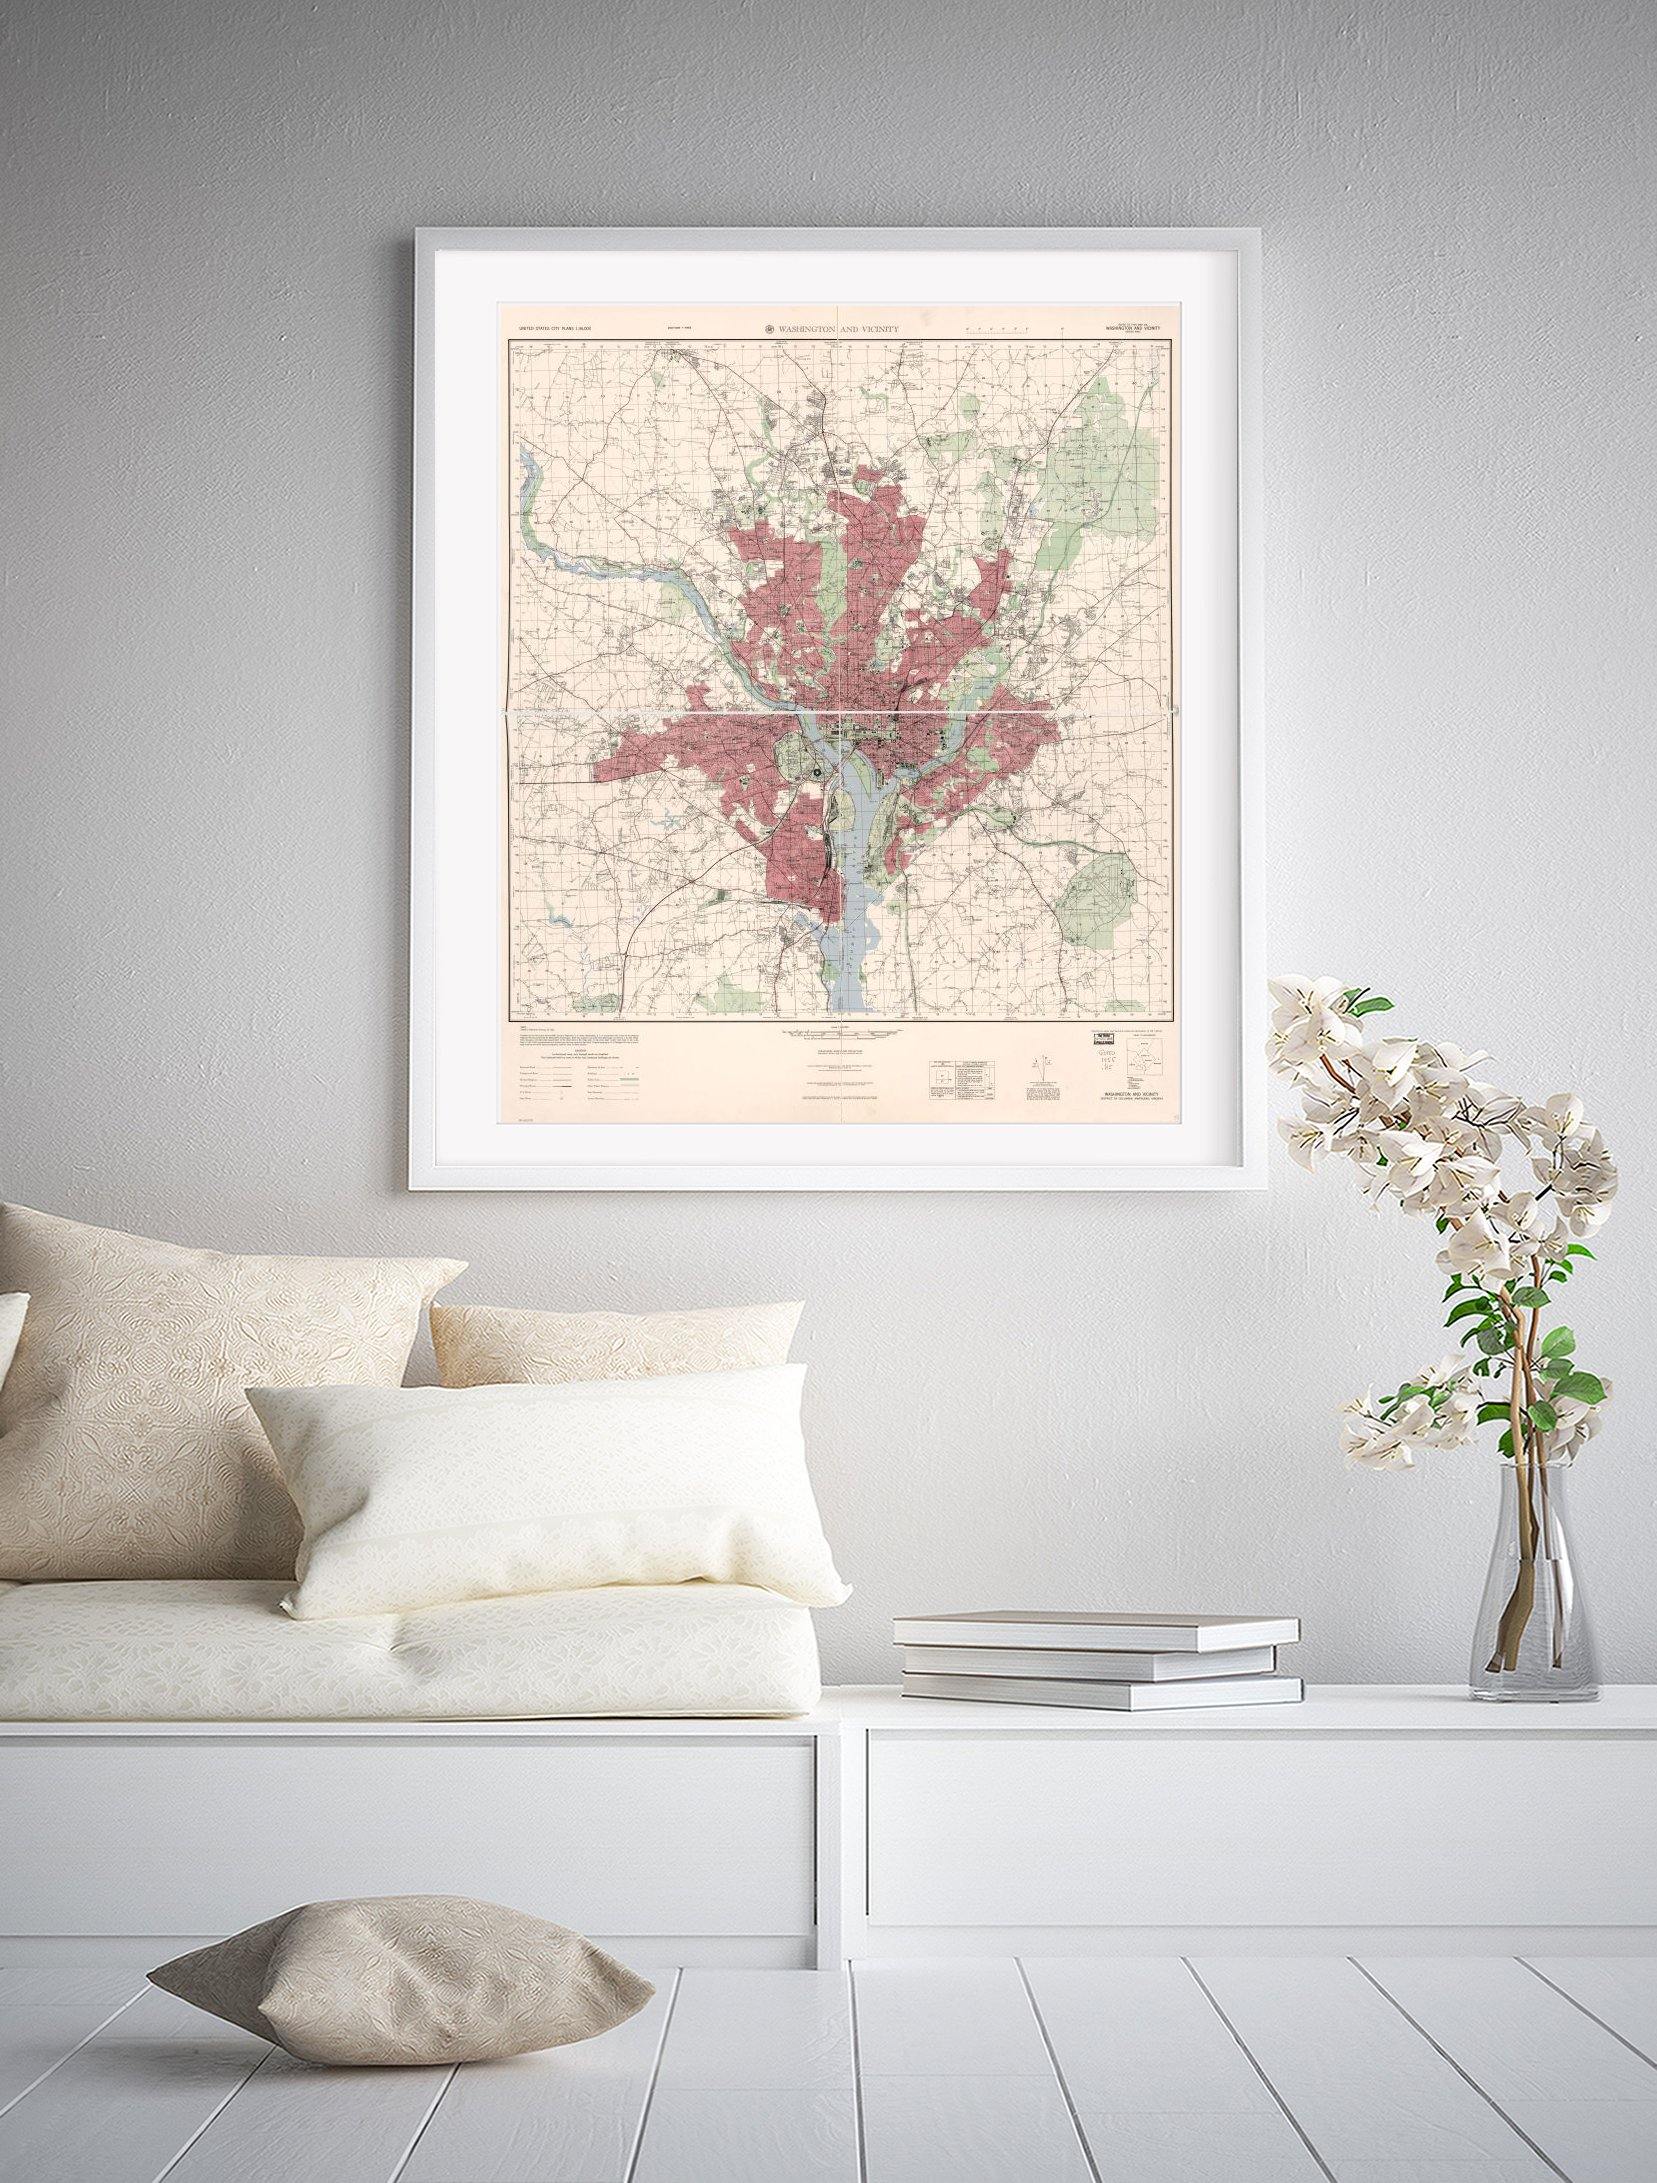 1955 Map| United States city plans 1:36,000. Washington and vicinity| - New York Map Company